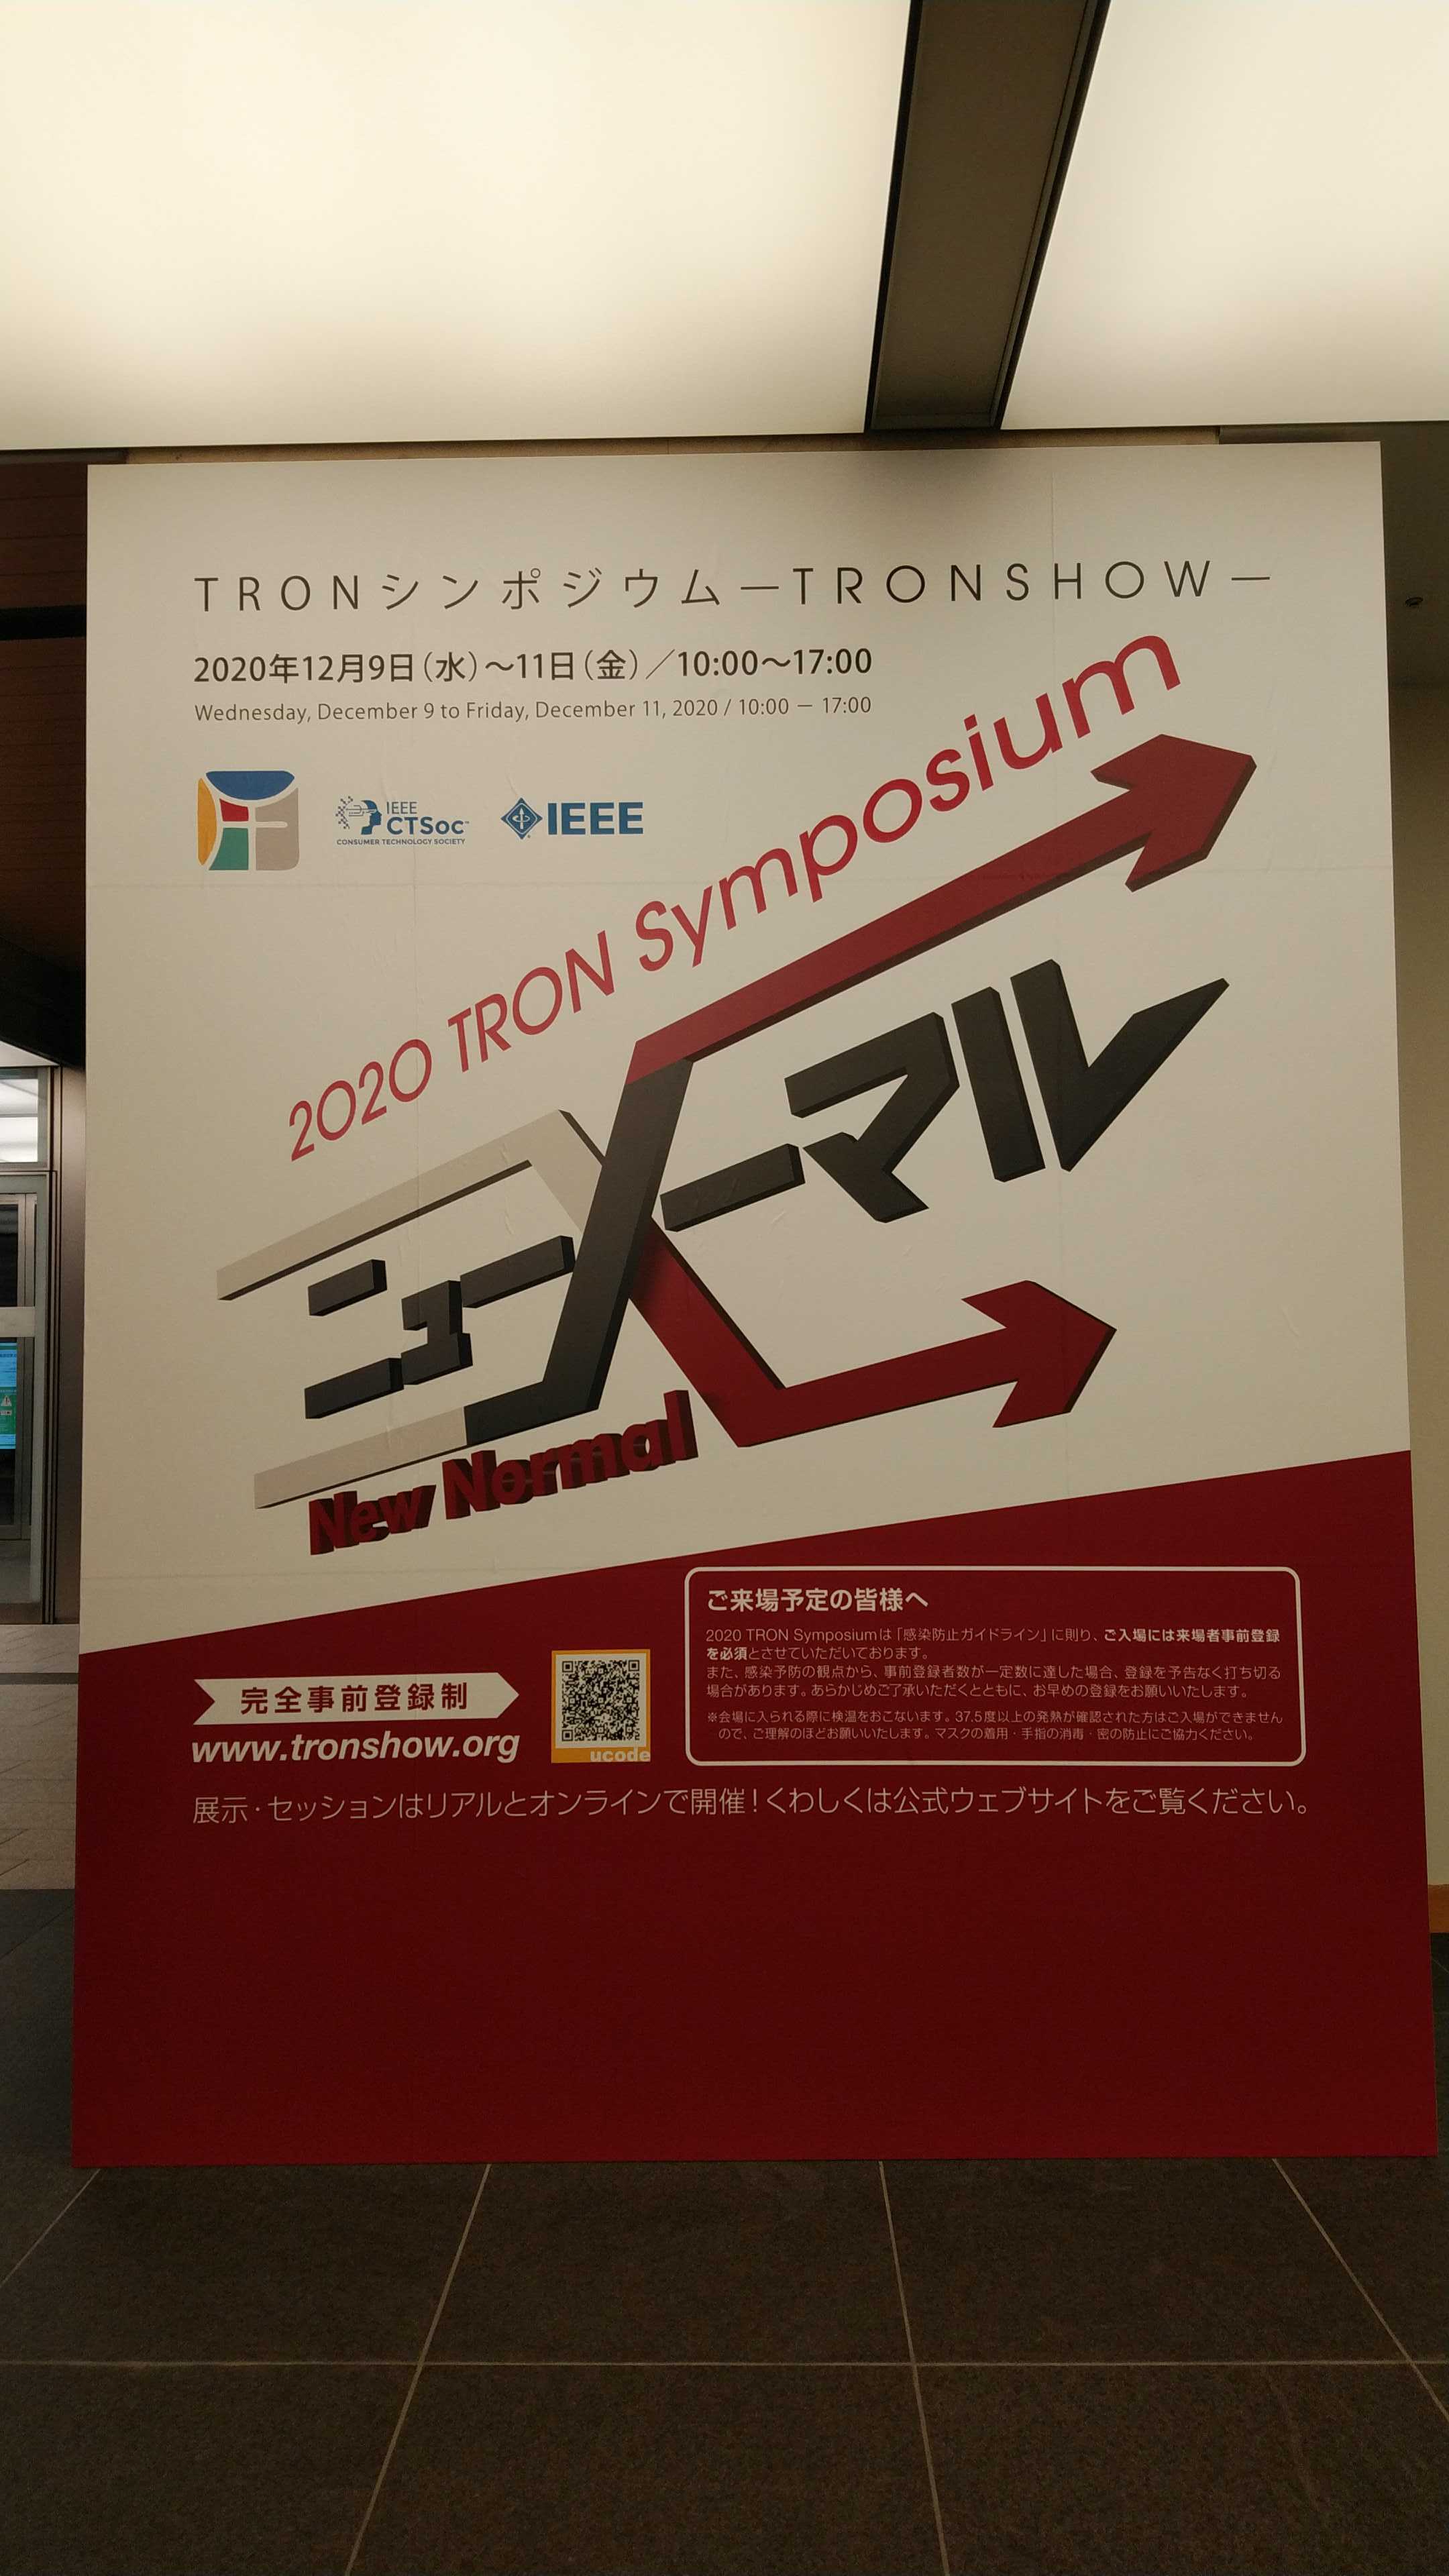 2020 TRON Symposium(TRONSHOW)は「ニューノーマル」をテーマにリアル(会場)とバーチャル(オンライン)で同時開催